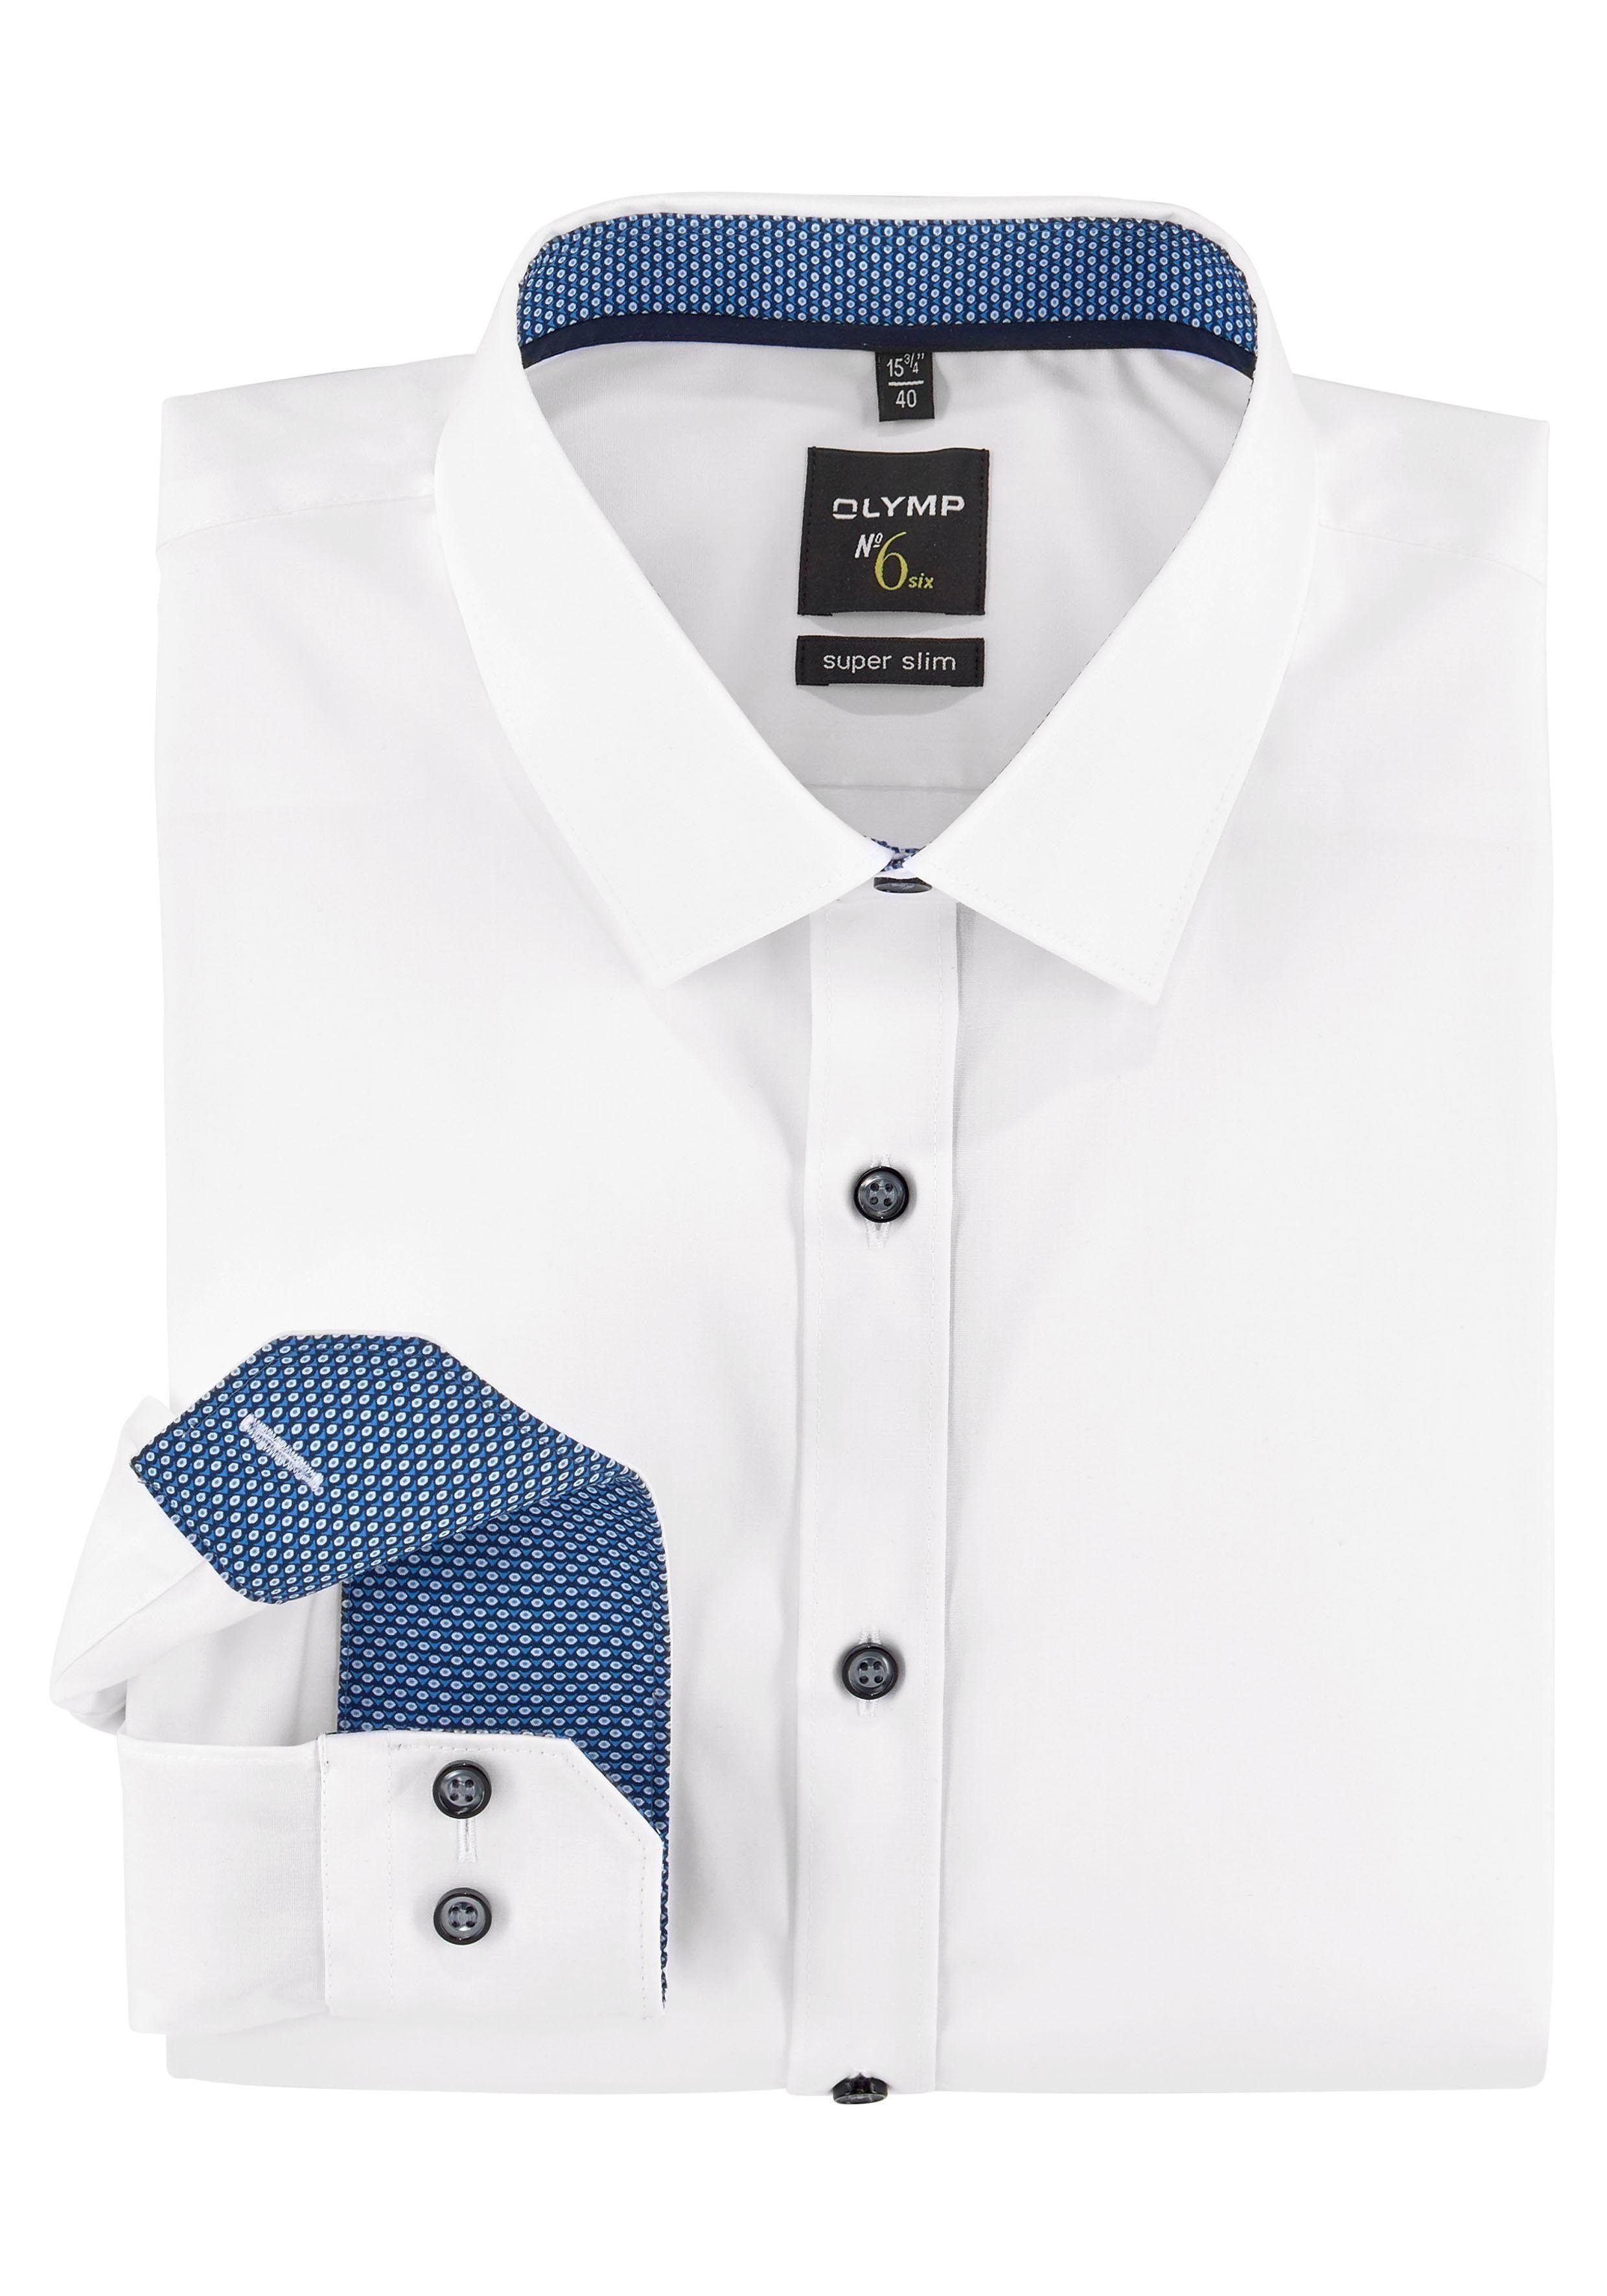 Details Six No. slim Businesshemd weiß-blau-kontrastfarbene OLYMP super